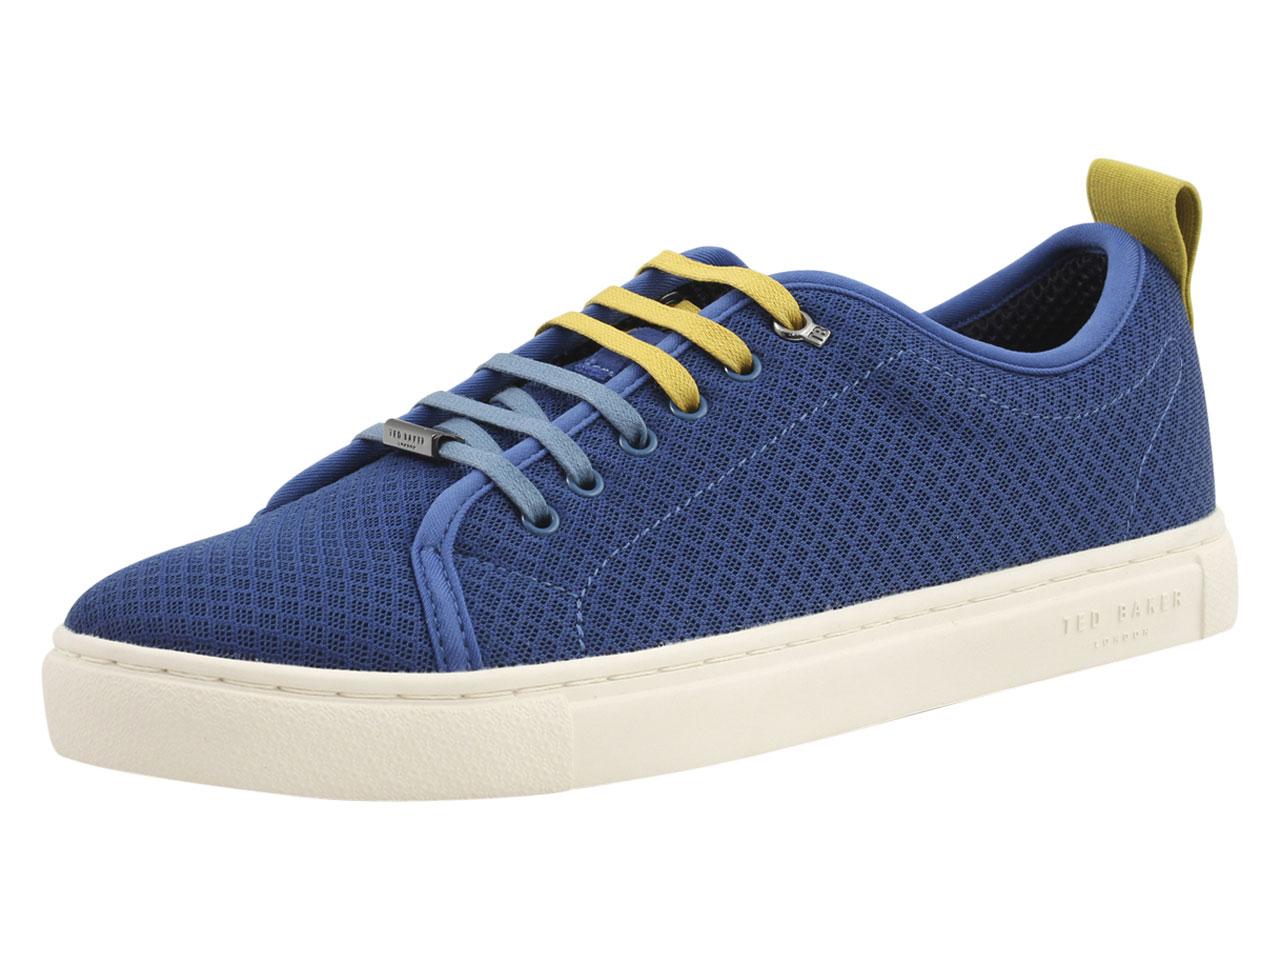 Ted Baker Men's Lannse Fashion Sneakers Shoes - Blue - 10 D(M) US